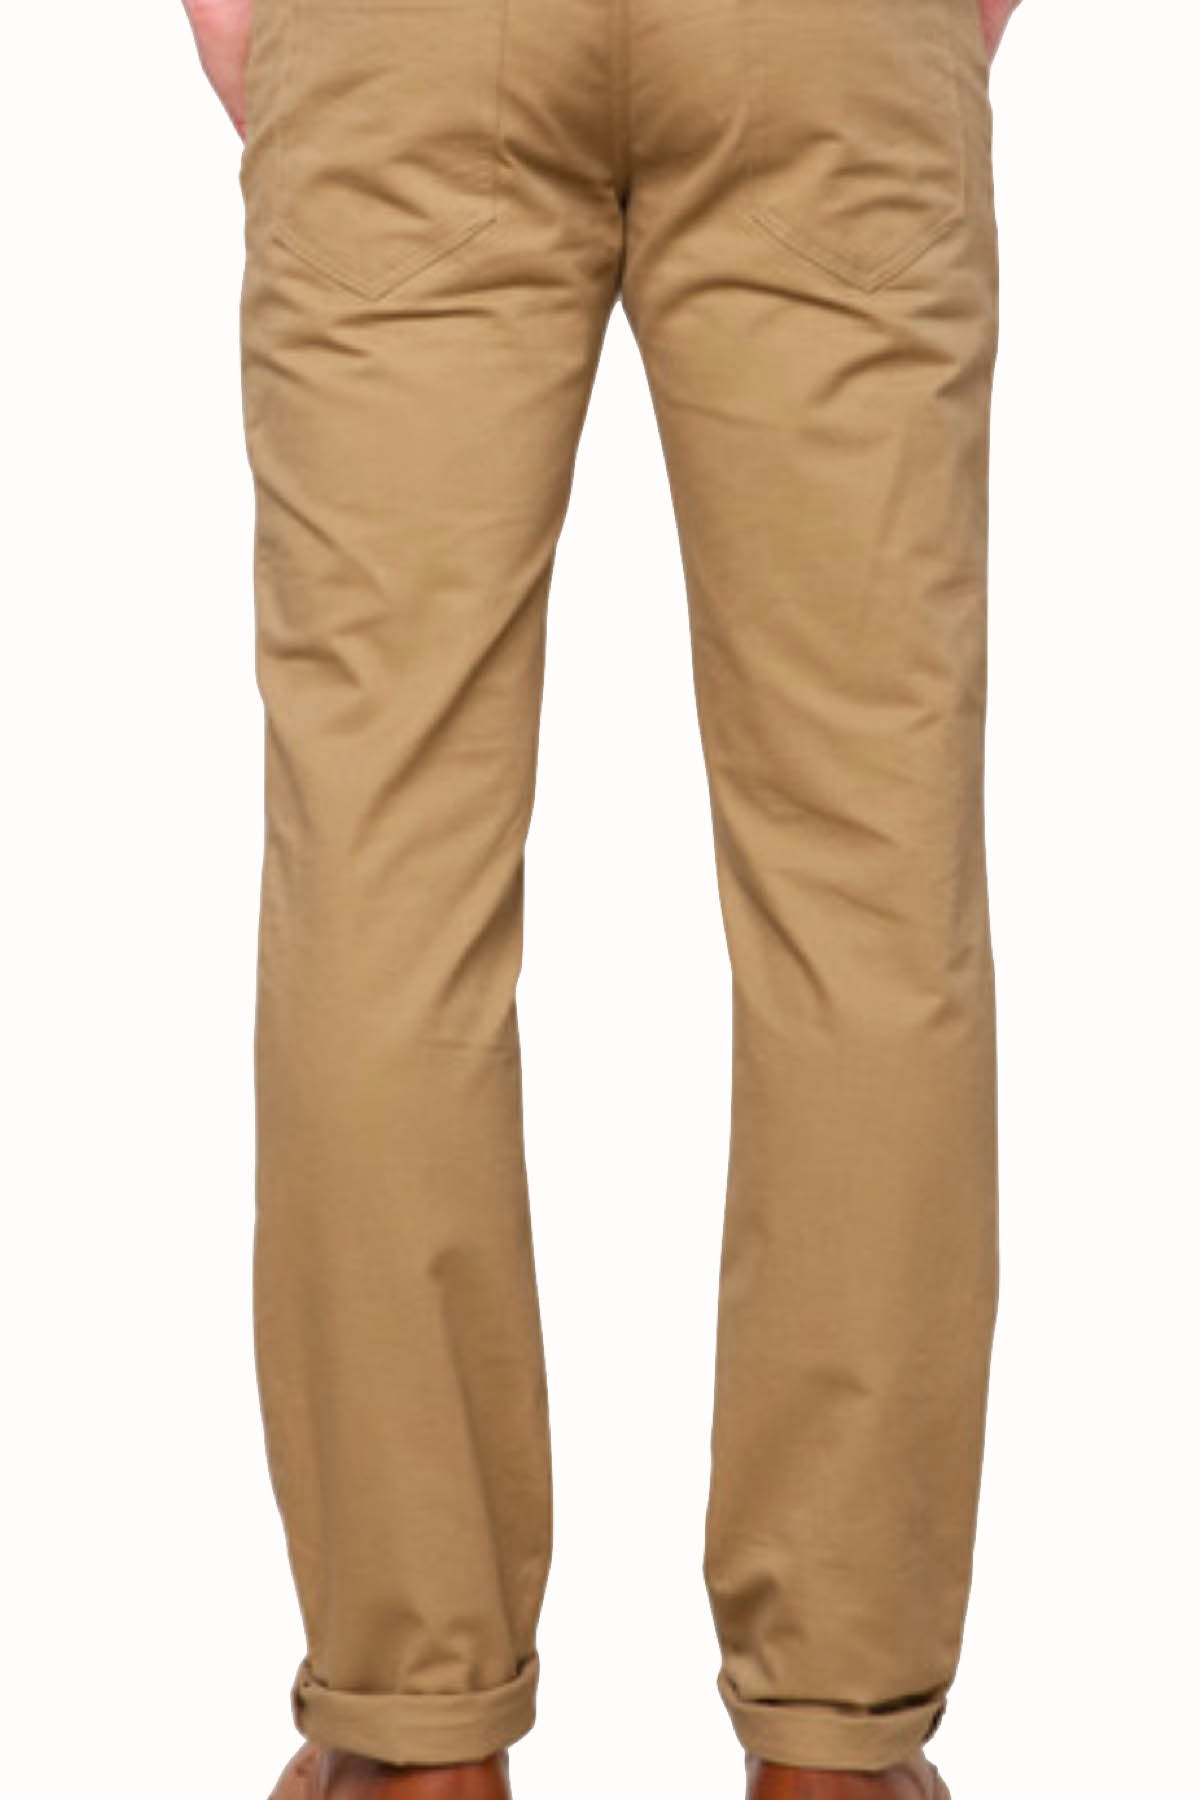 Something Strong Brown Straight Leg 5-pocket Pant